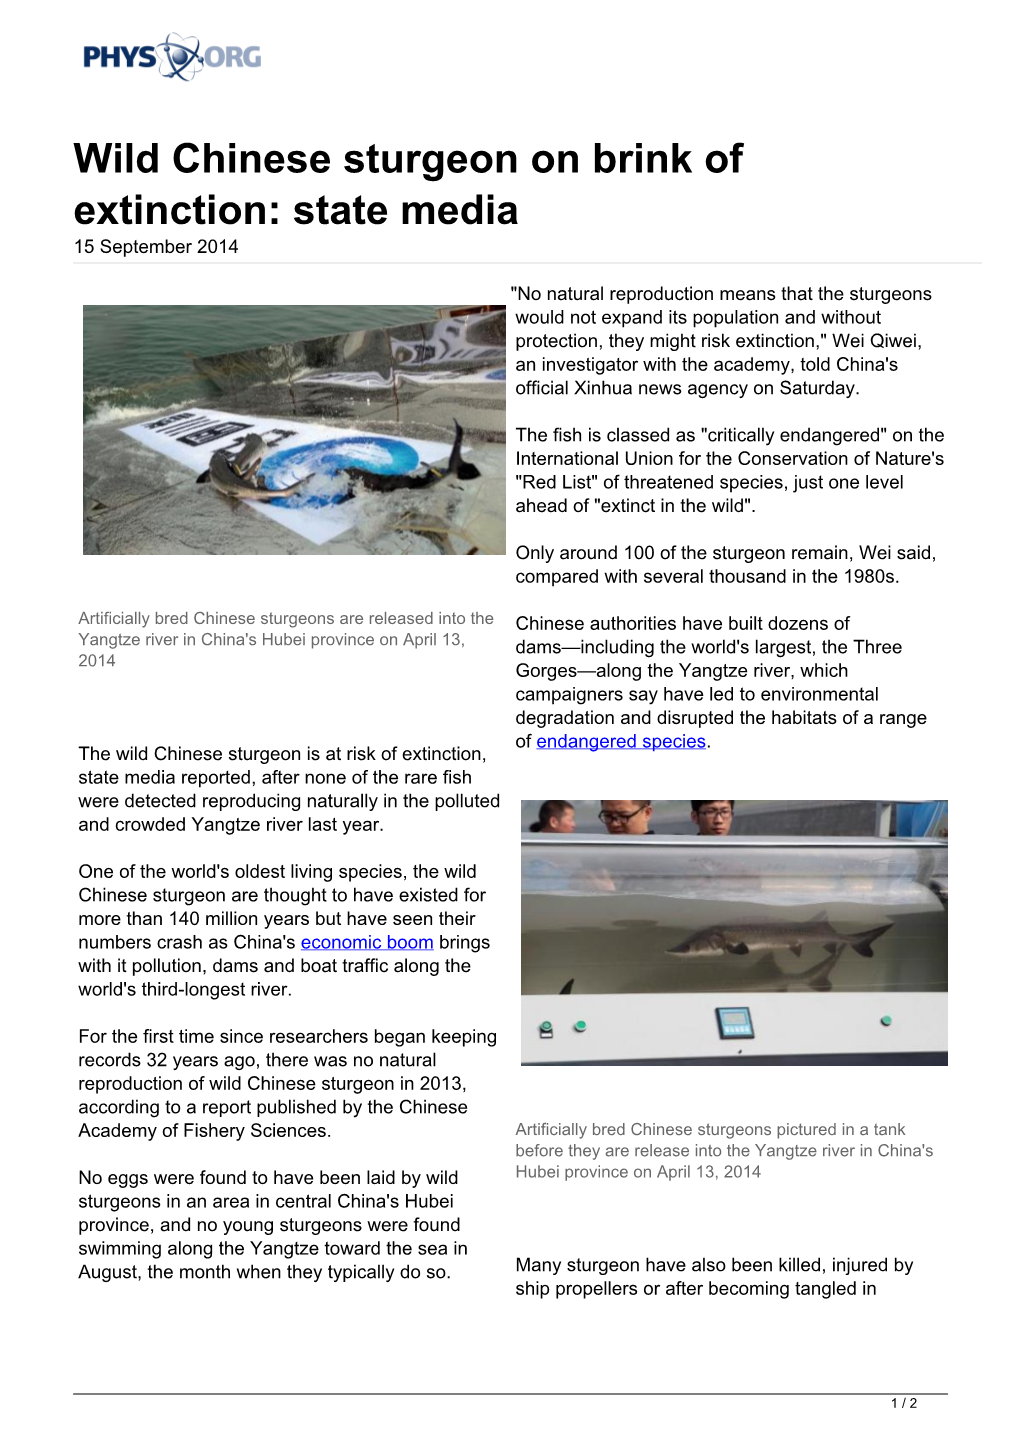 Wild Chinese Sturgeon on Brink of Extinction: State Media 15 September 2014